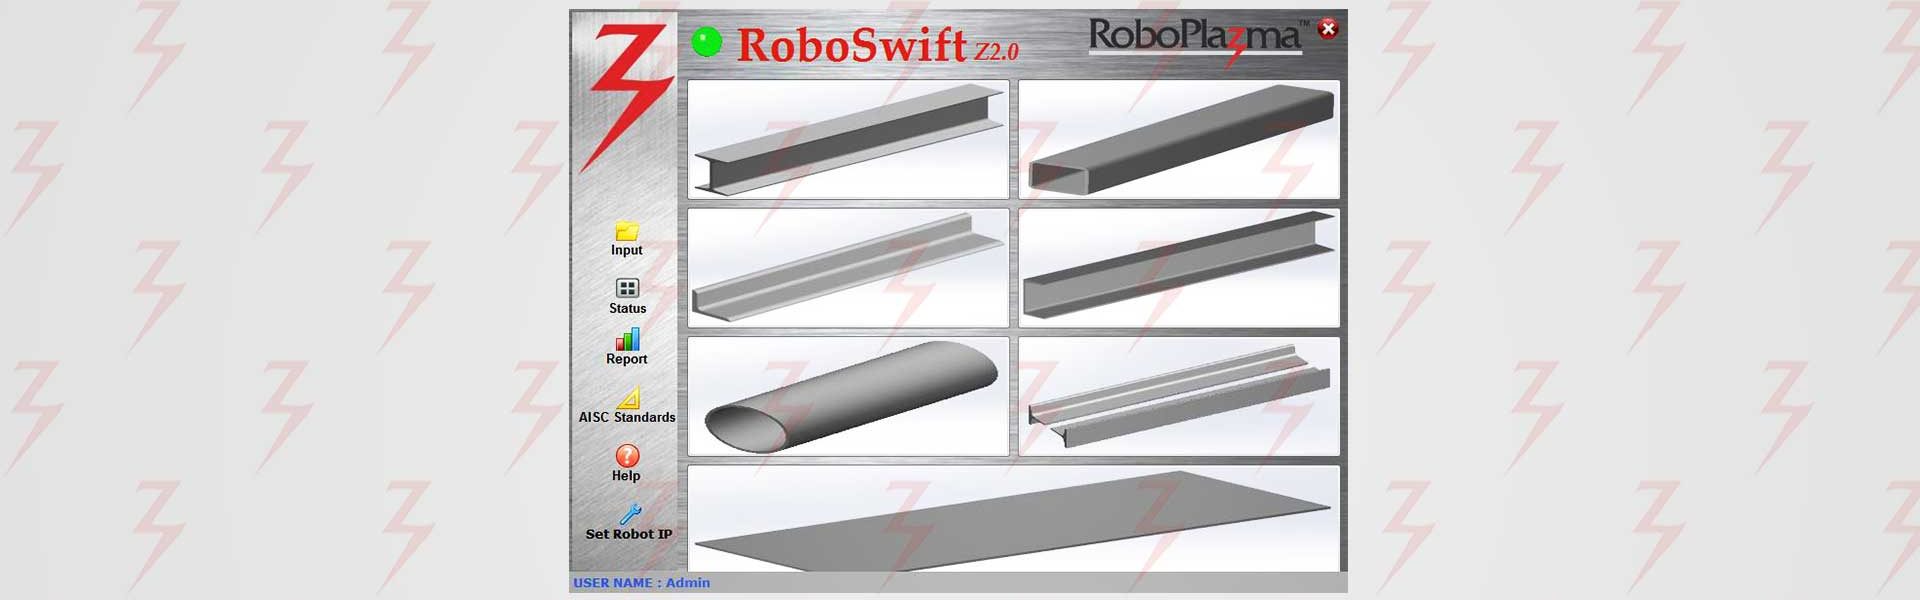 roboswift-logo